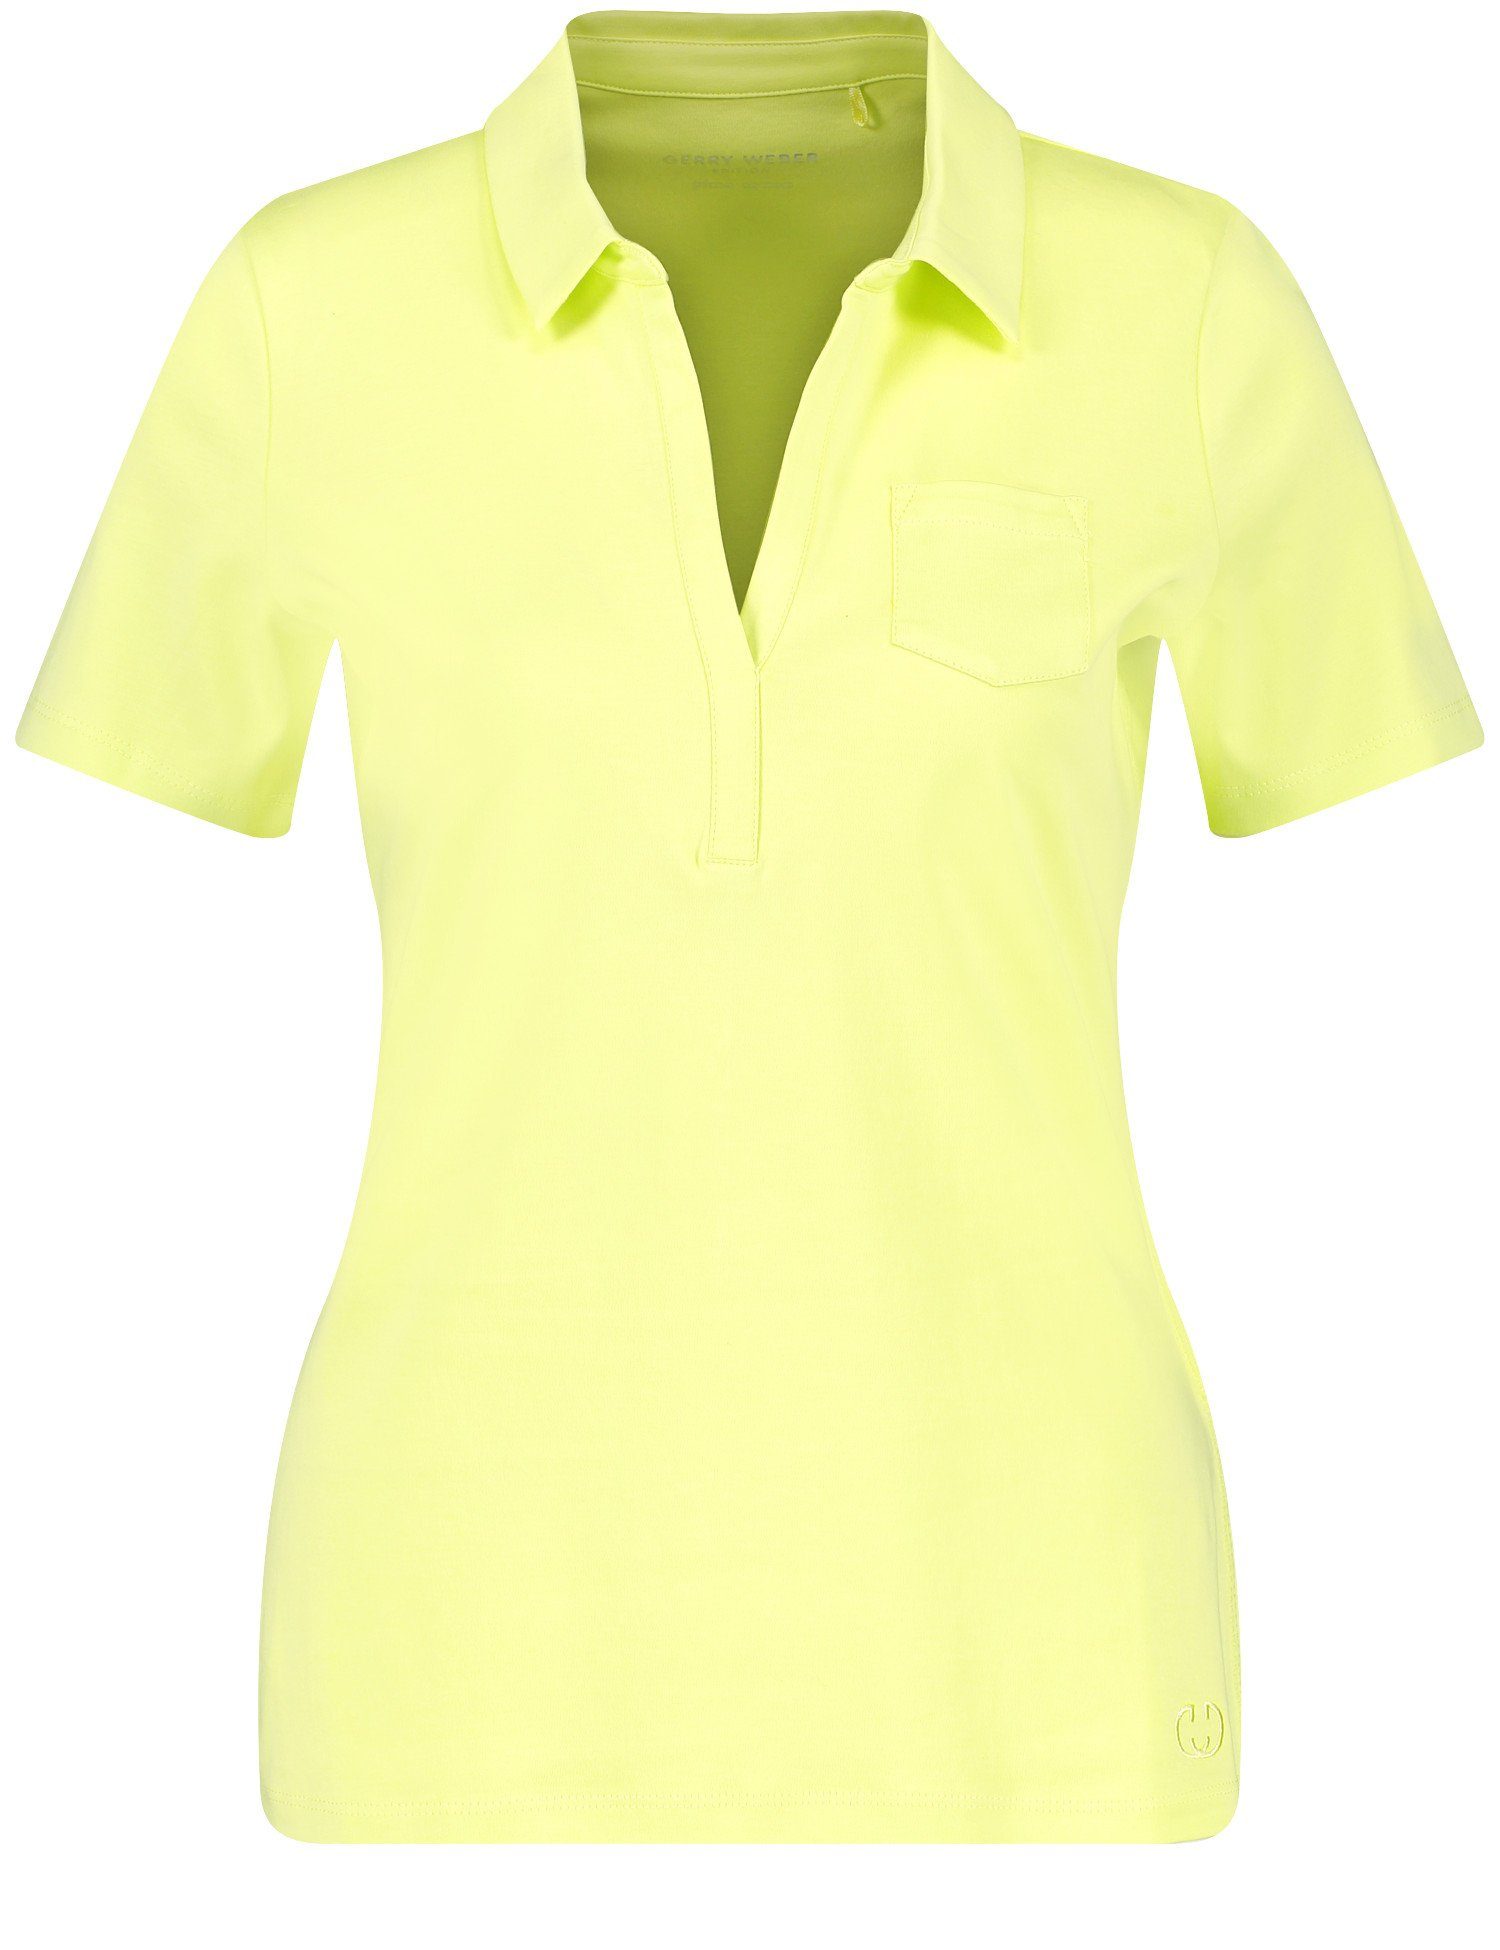 GERRY WEBER Poloshirt Kurzarm Poloshirt Light Lime